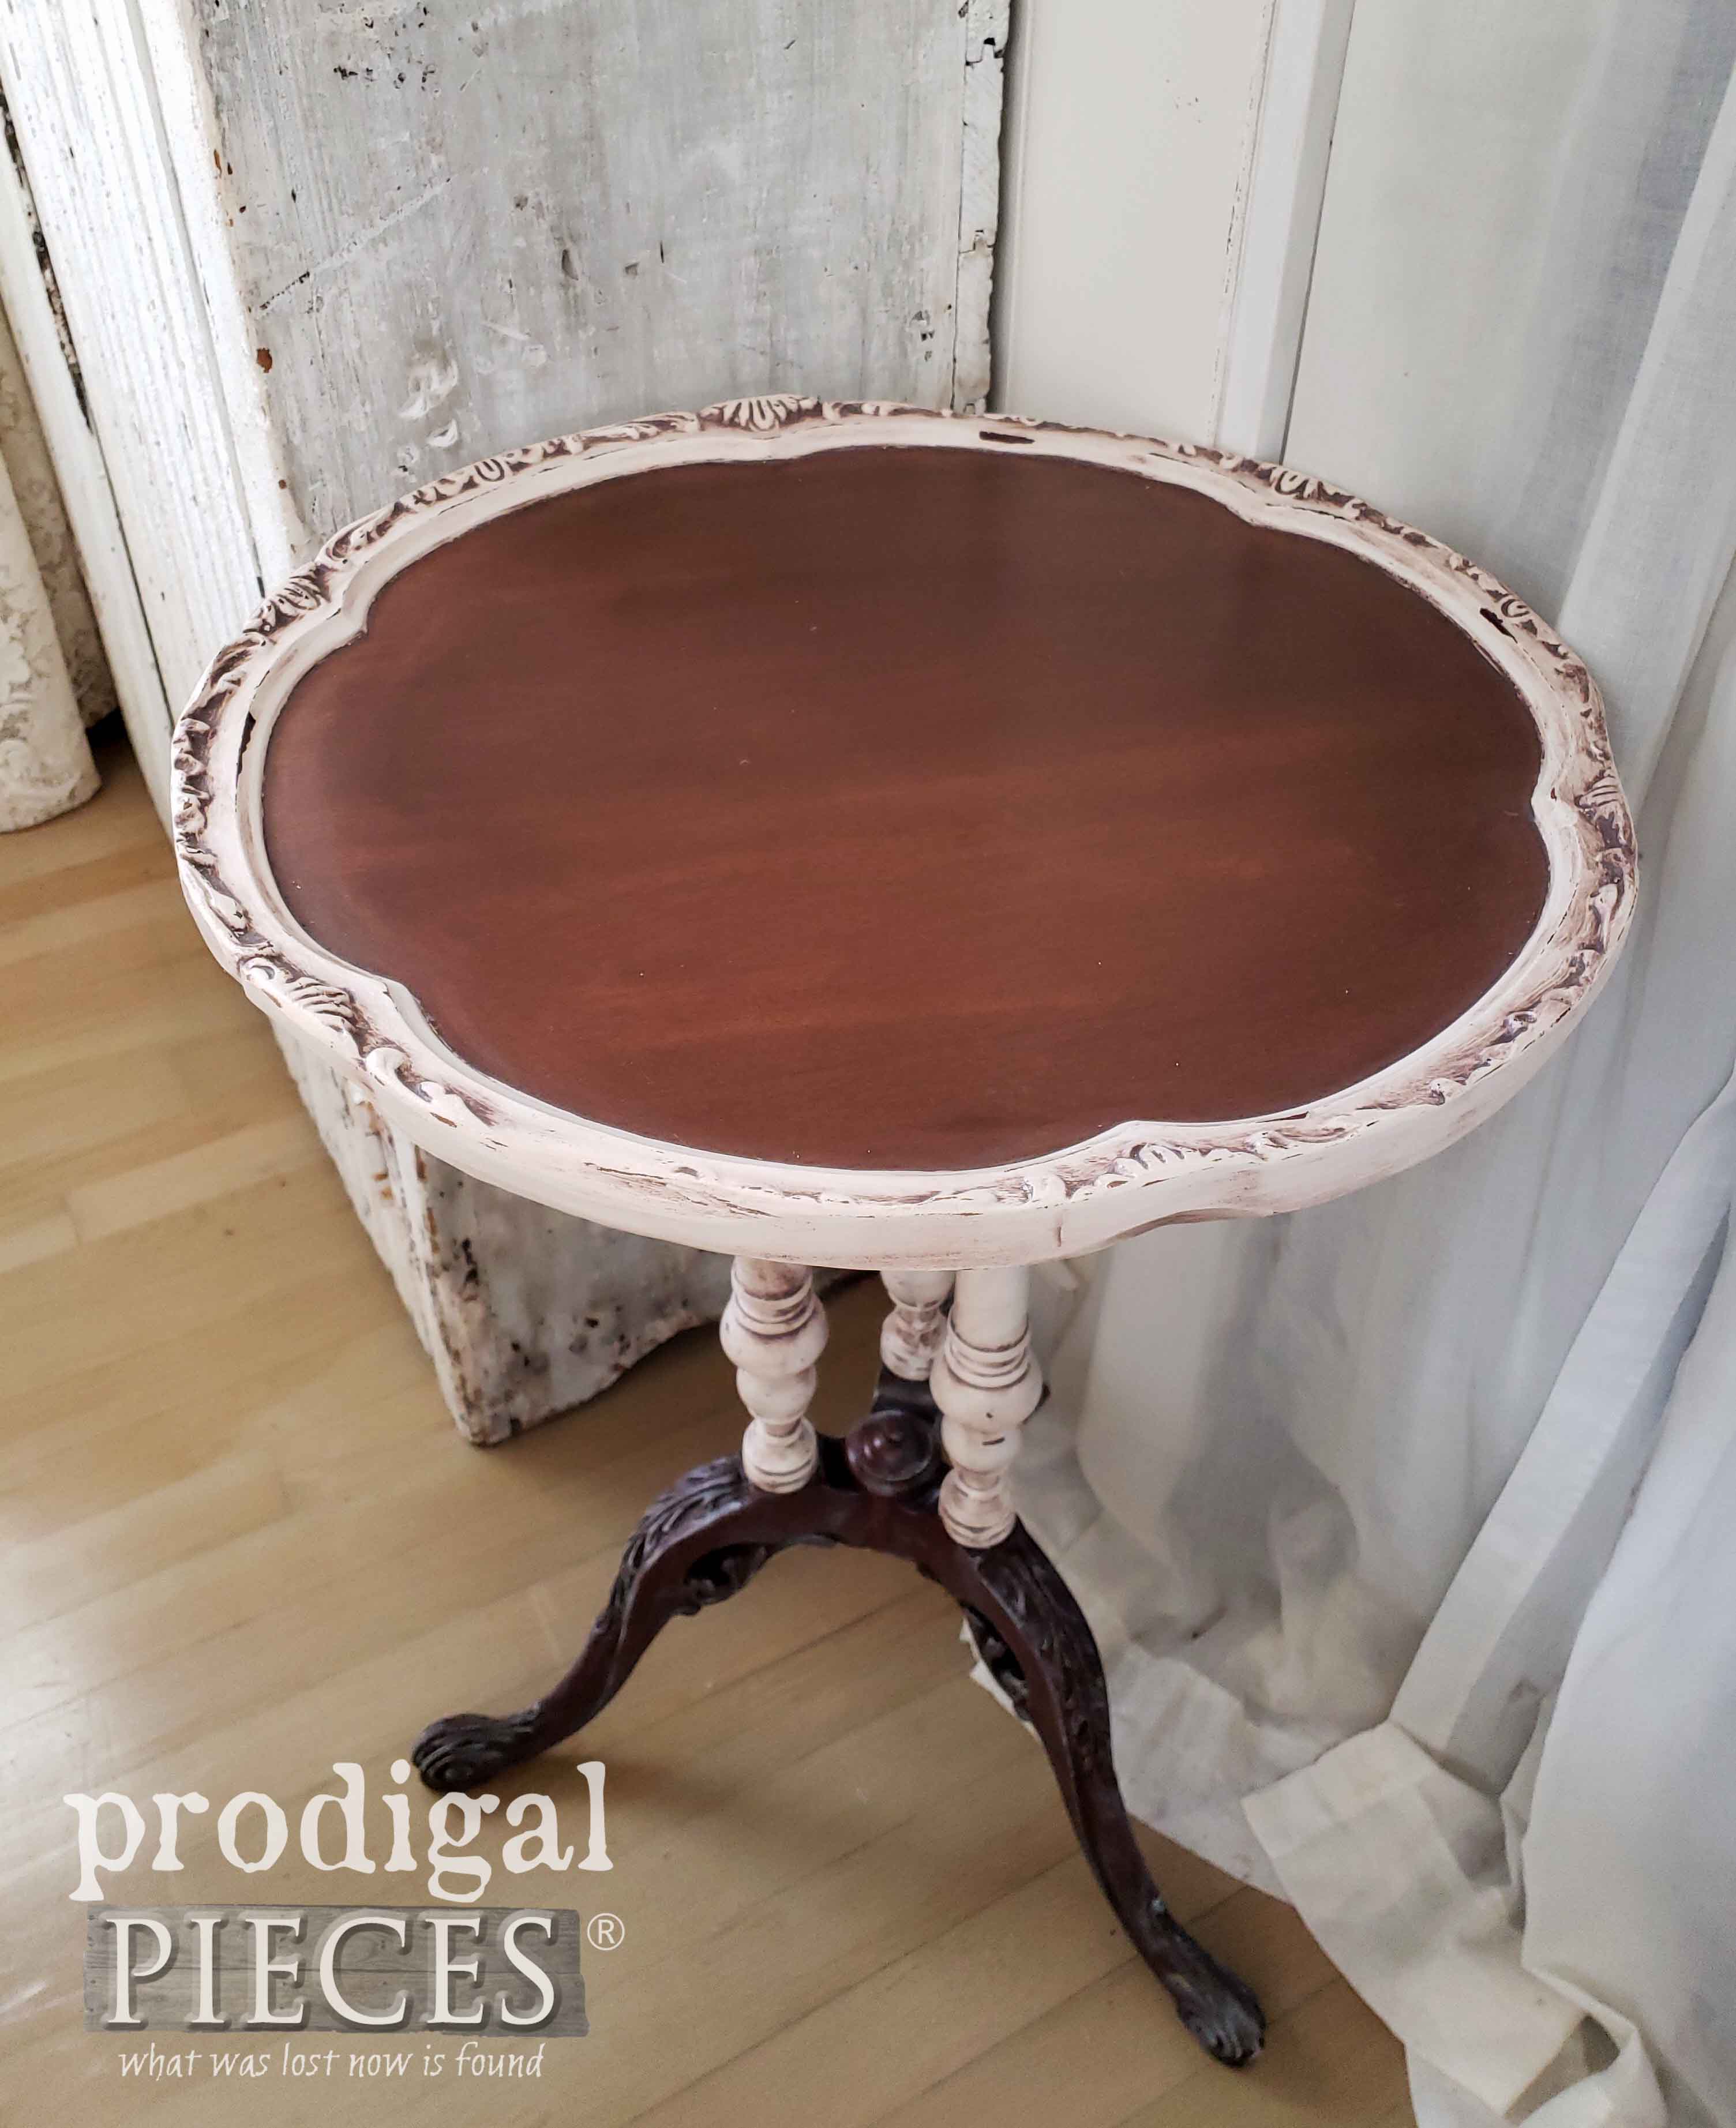 Antique Pie Crust Table Top Restored by Larissa of Prodigal Pieces | prodigalpieces.com #prodigalpieces #diy #furniture #home #farmhouse #homedecor